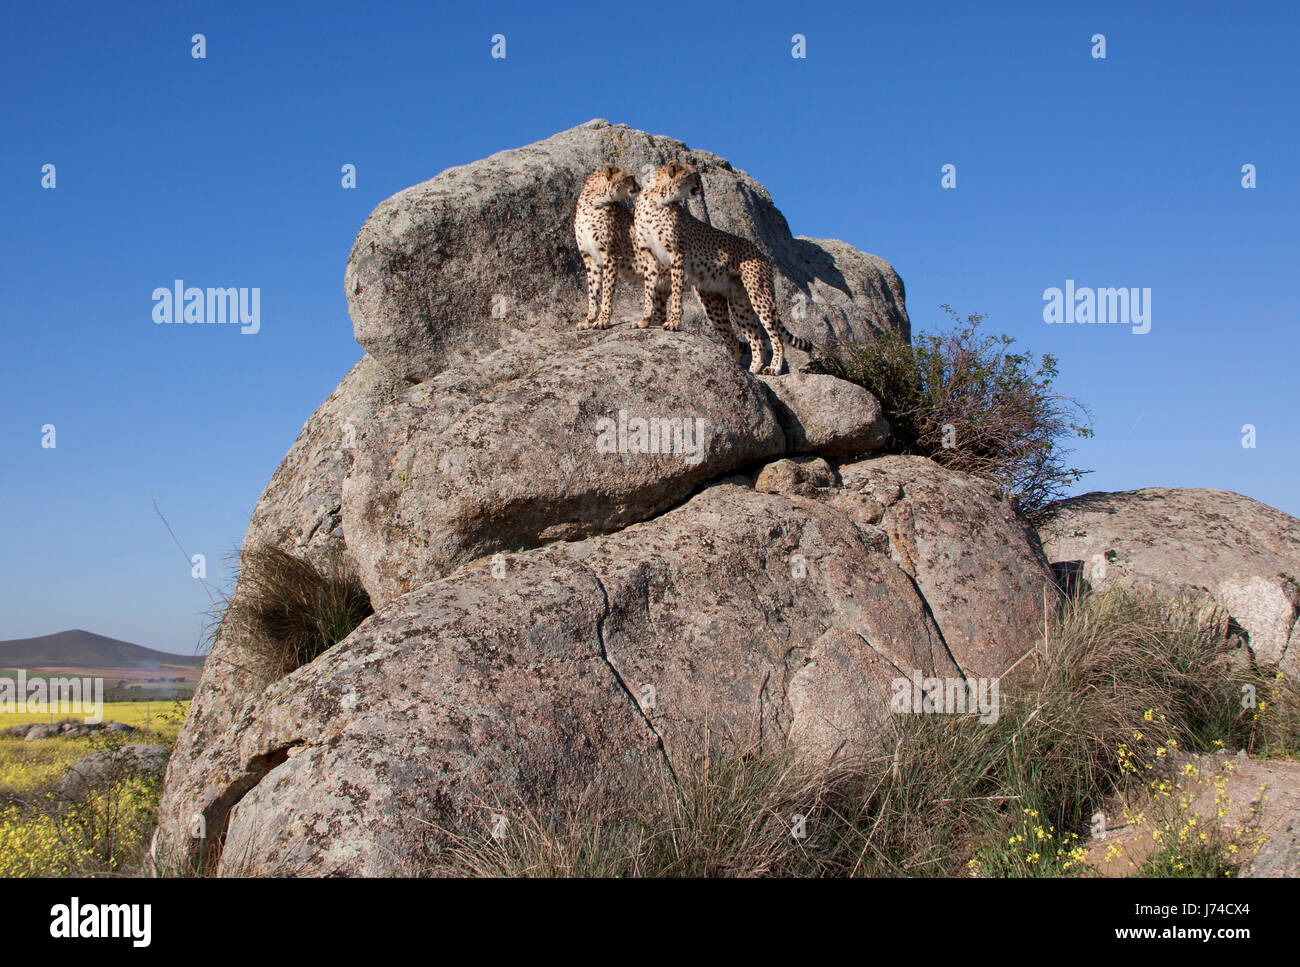 cheetah on a rock Stock Photo